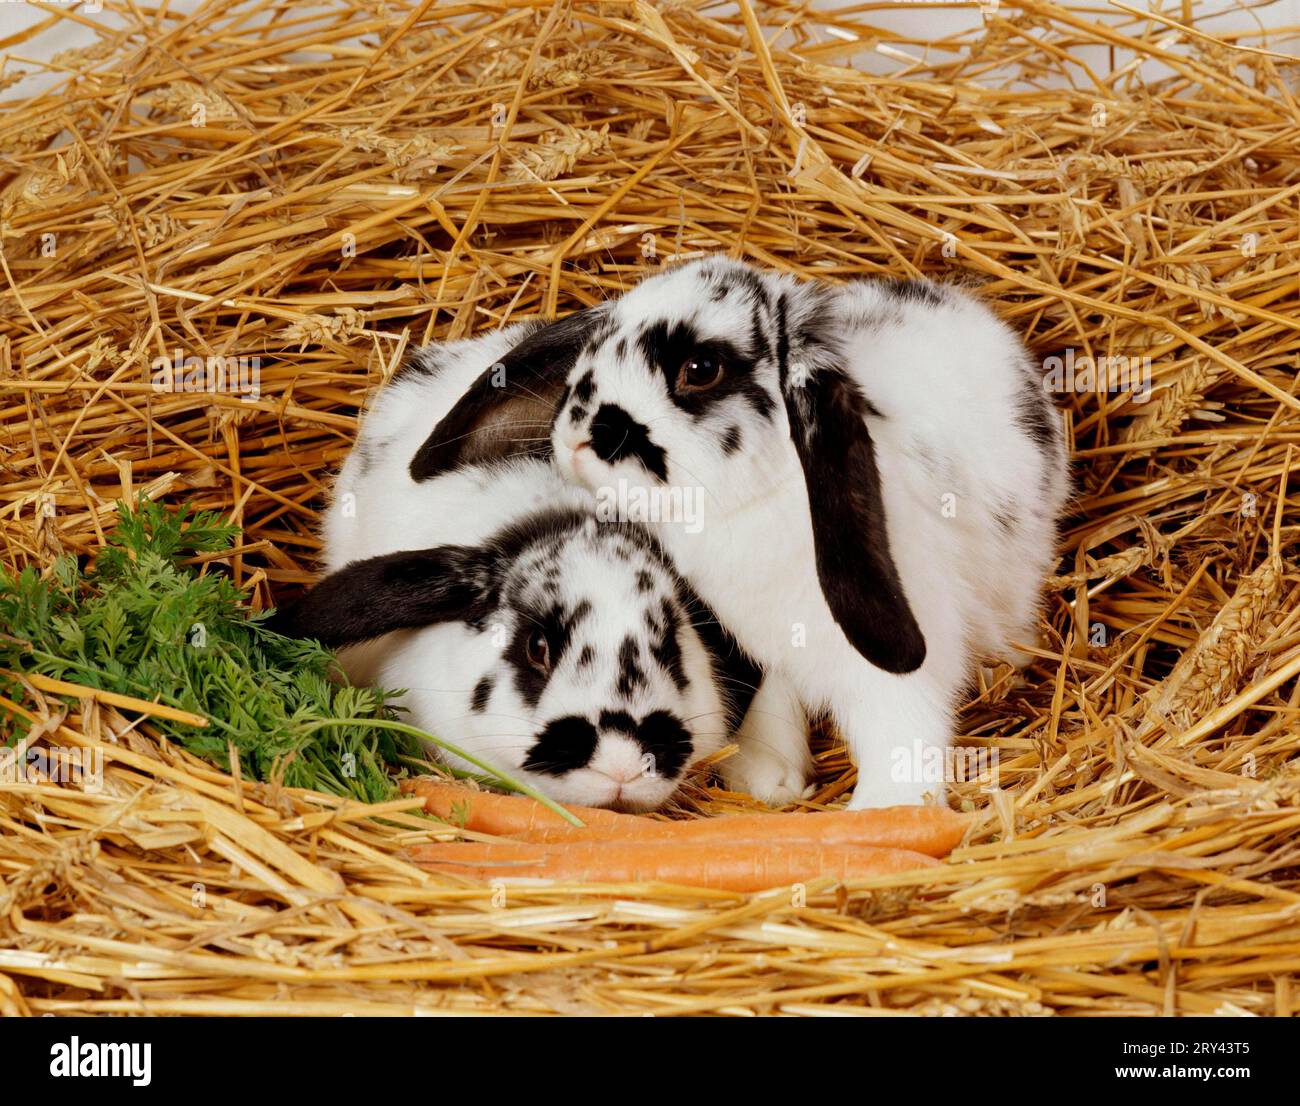 Lop-eared Rabbits, Ram Rabbits, Rabbit, indoor Stock Photo